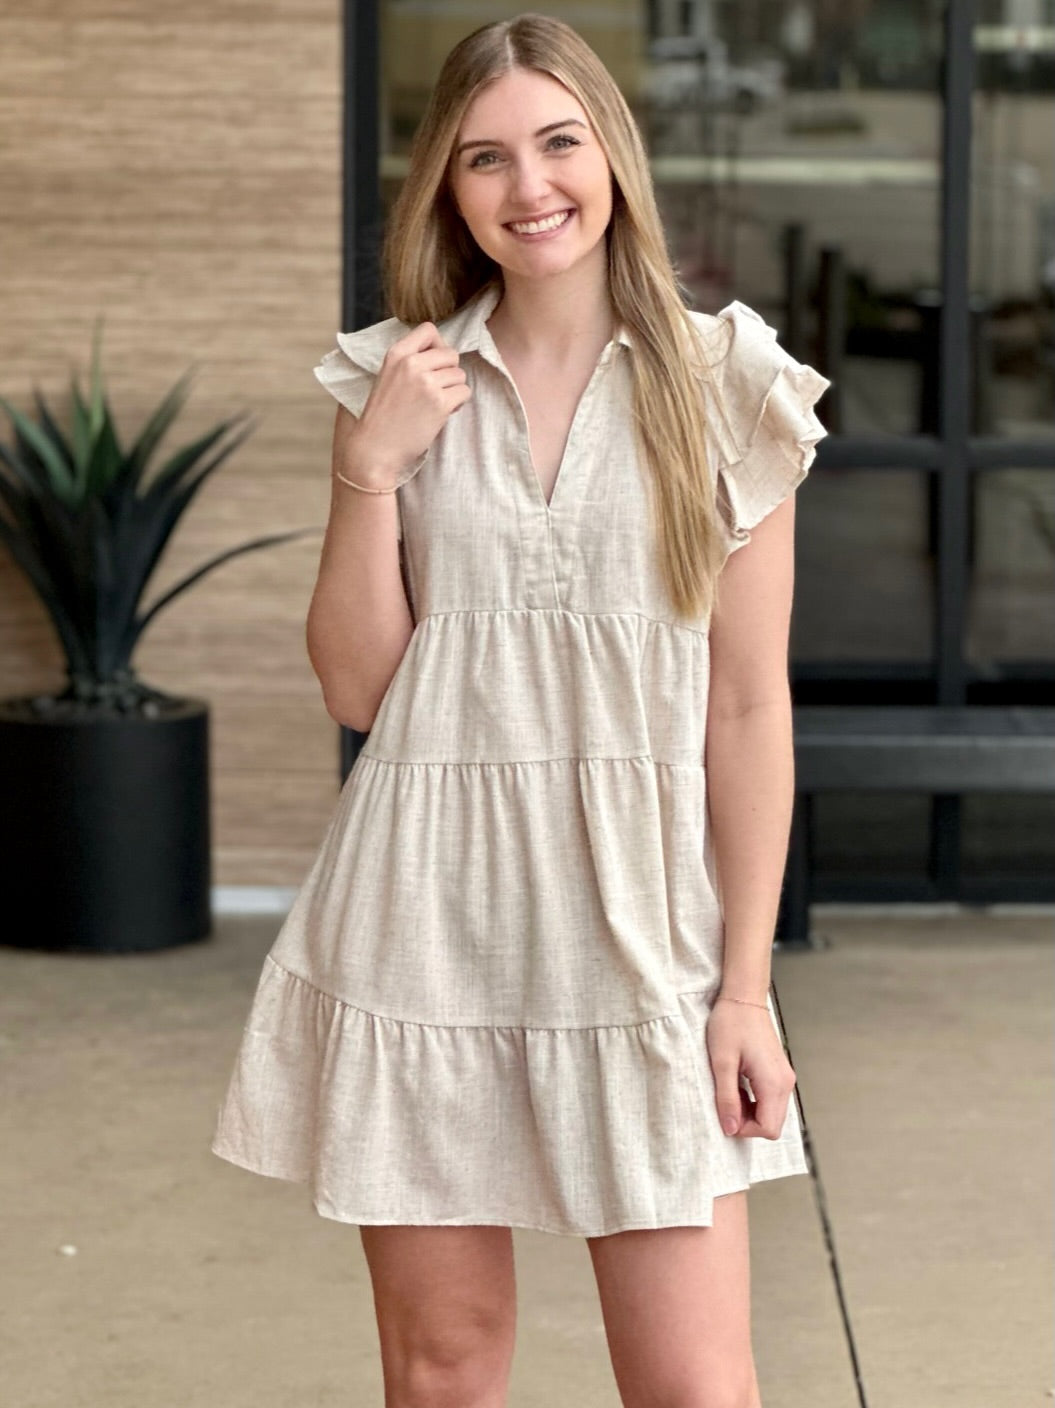 Lexi in oatmeal dress holding dress